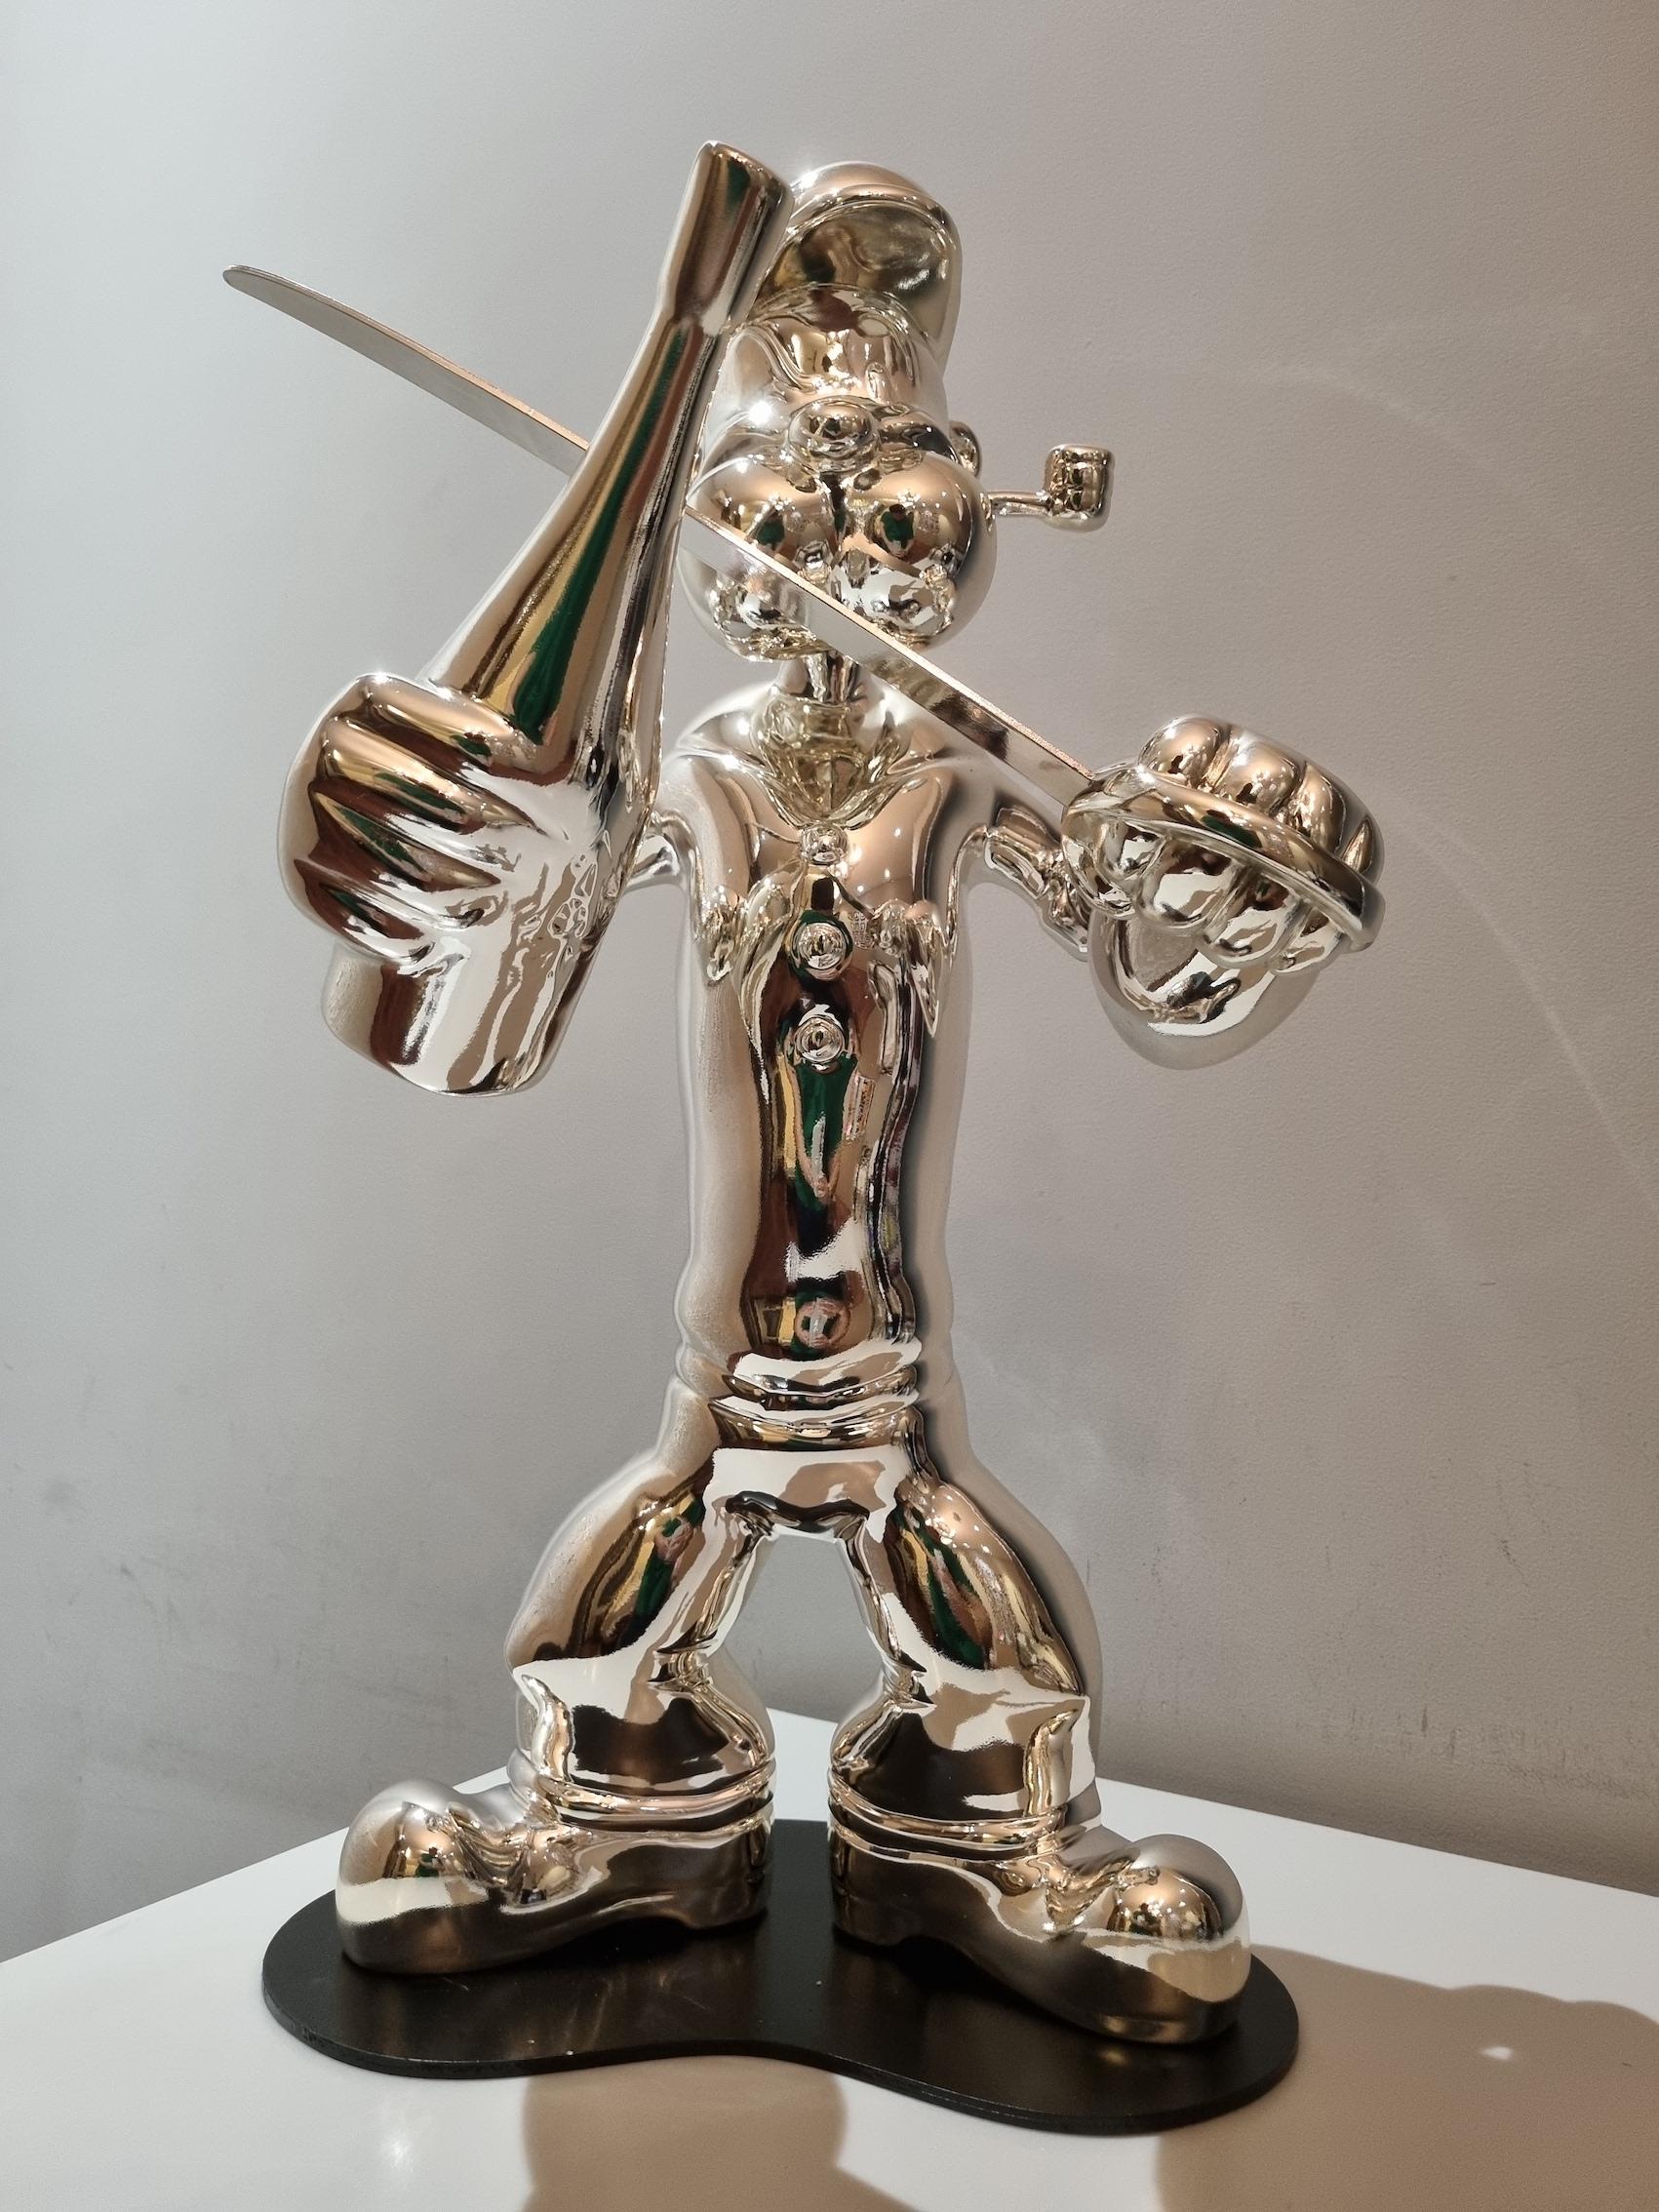 Popeye-original iconic pop art modern sculpture figure-artwork-contemporary Art - Sculpture by Sanuj Birla